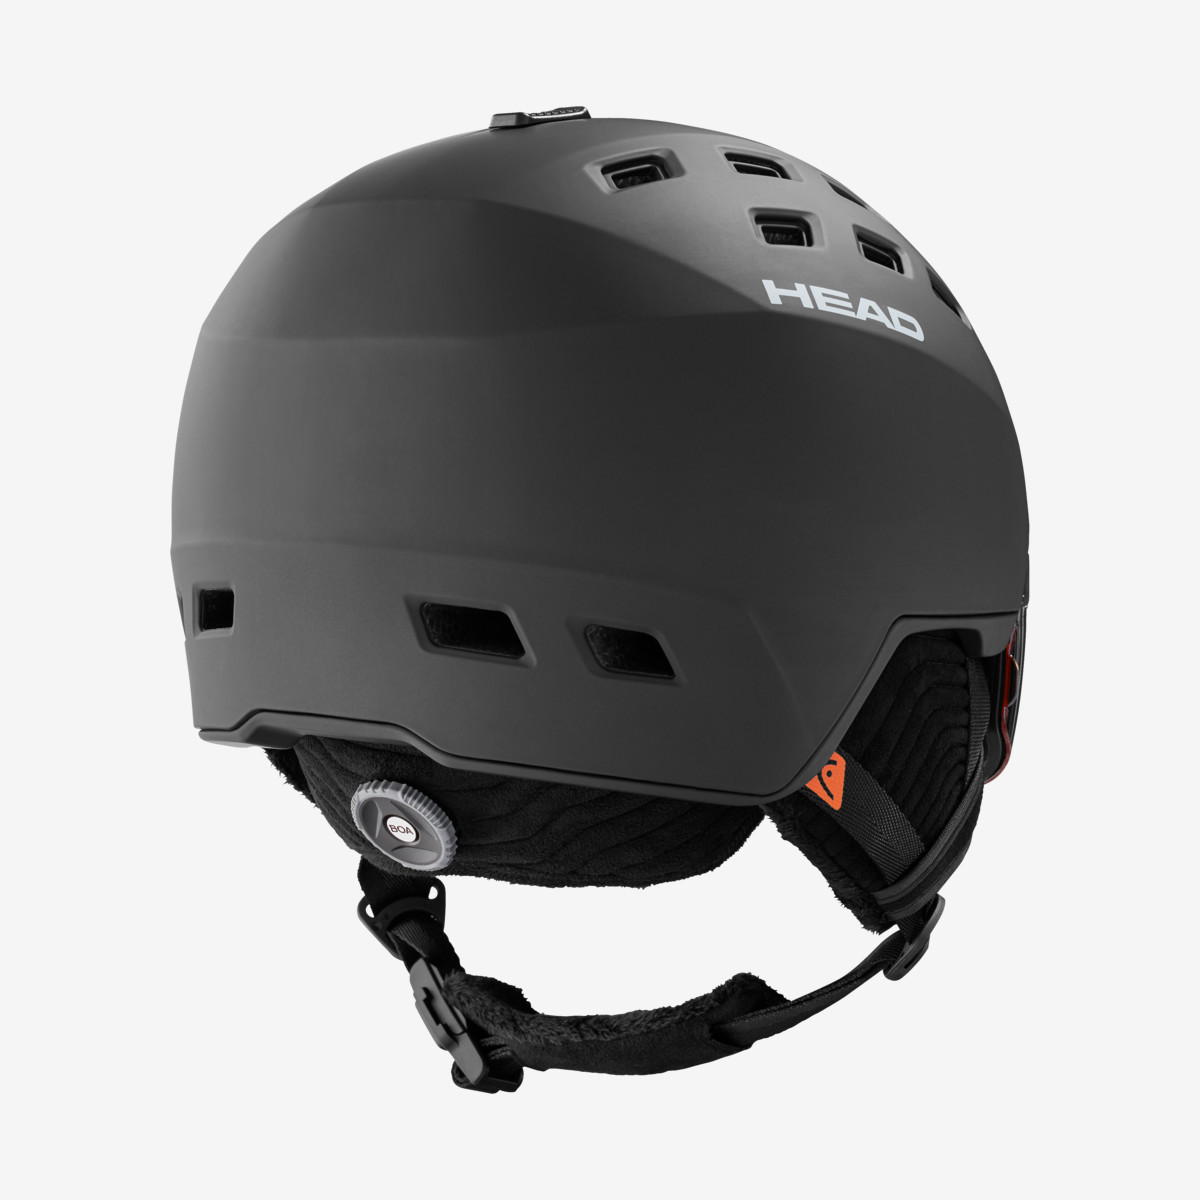 Ski Visor Helmet -  head RADAR VISOR SKI HELMET